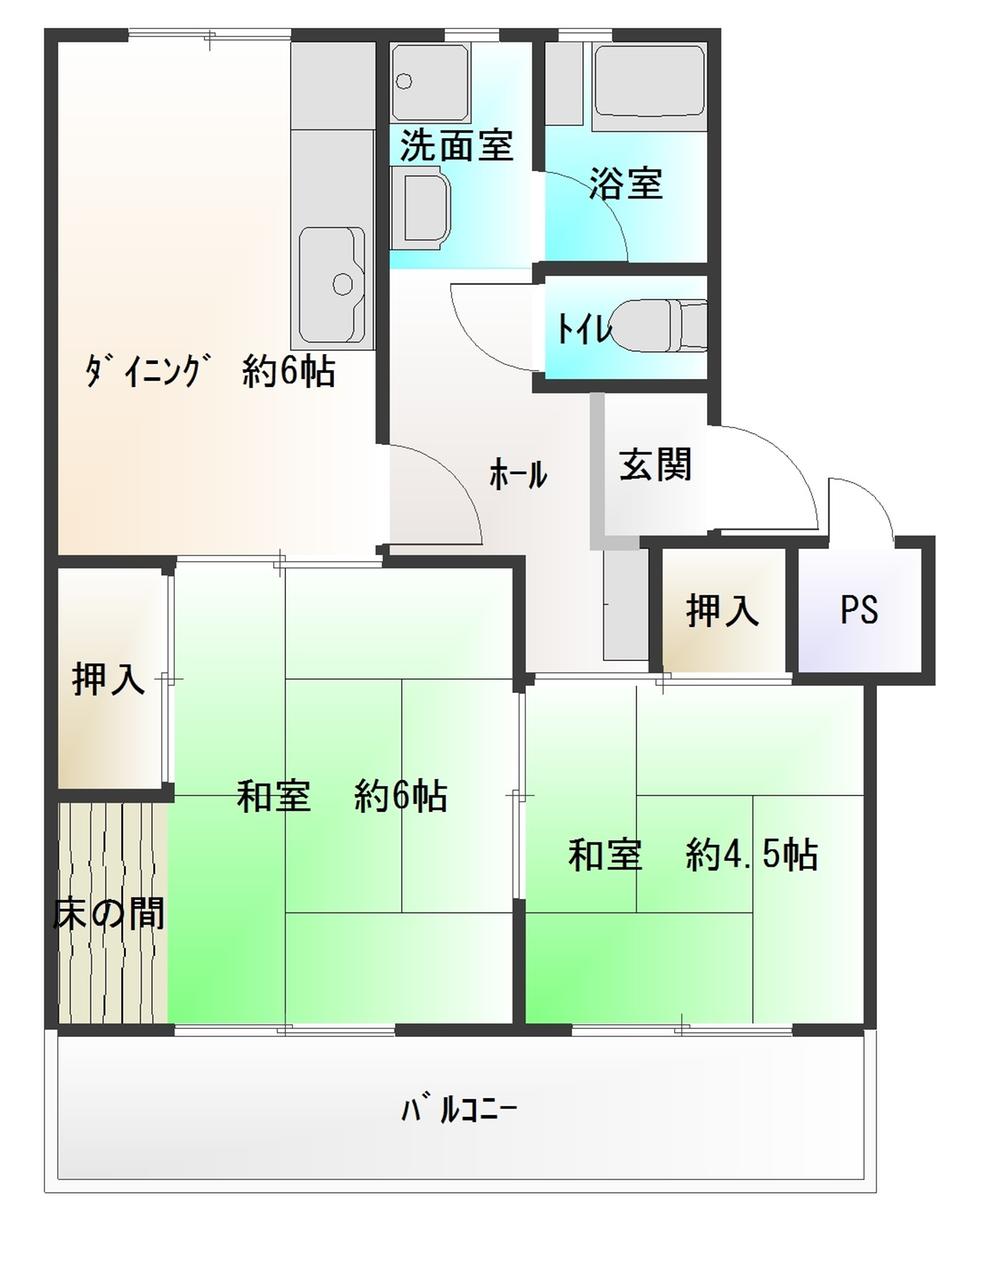 Floor plan. 2DK, Price 4.5 million yen, Occupied area 43.66 sq m , Balcony area 7.33 sq m